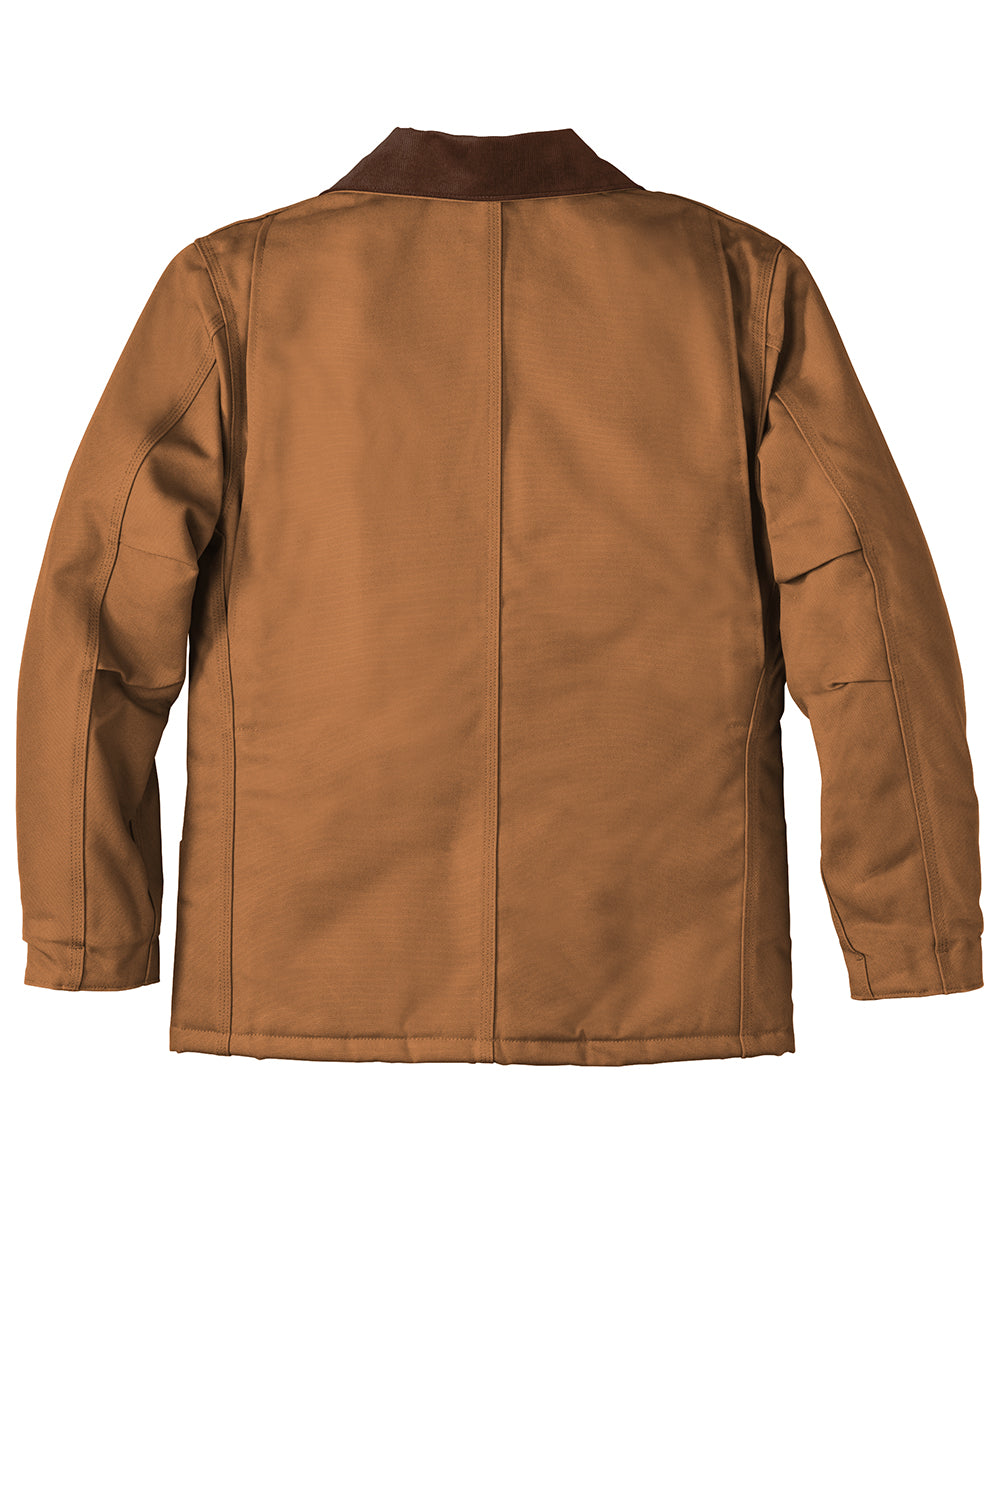 Carhartt CTC003/CTTC003 Mens Wind & Water Resistant Duck Cloth Full Zip Jacket Carhartt Brown Flat Back